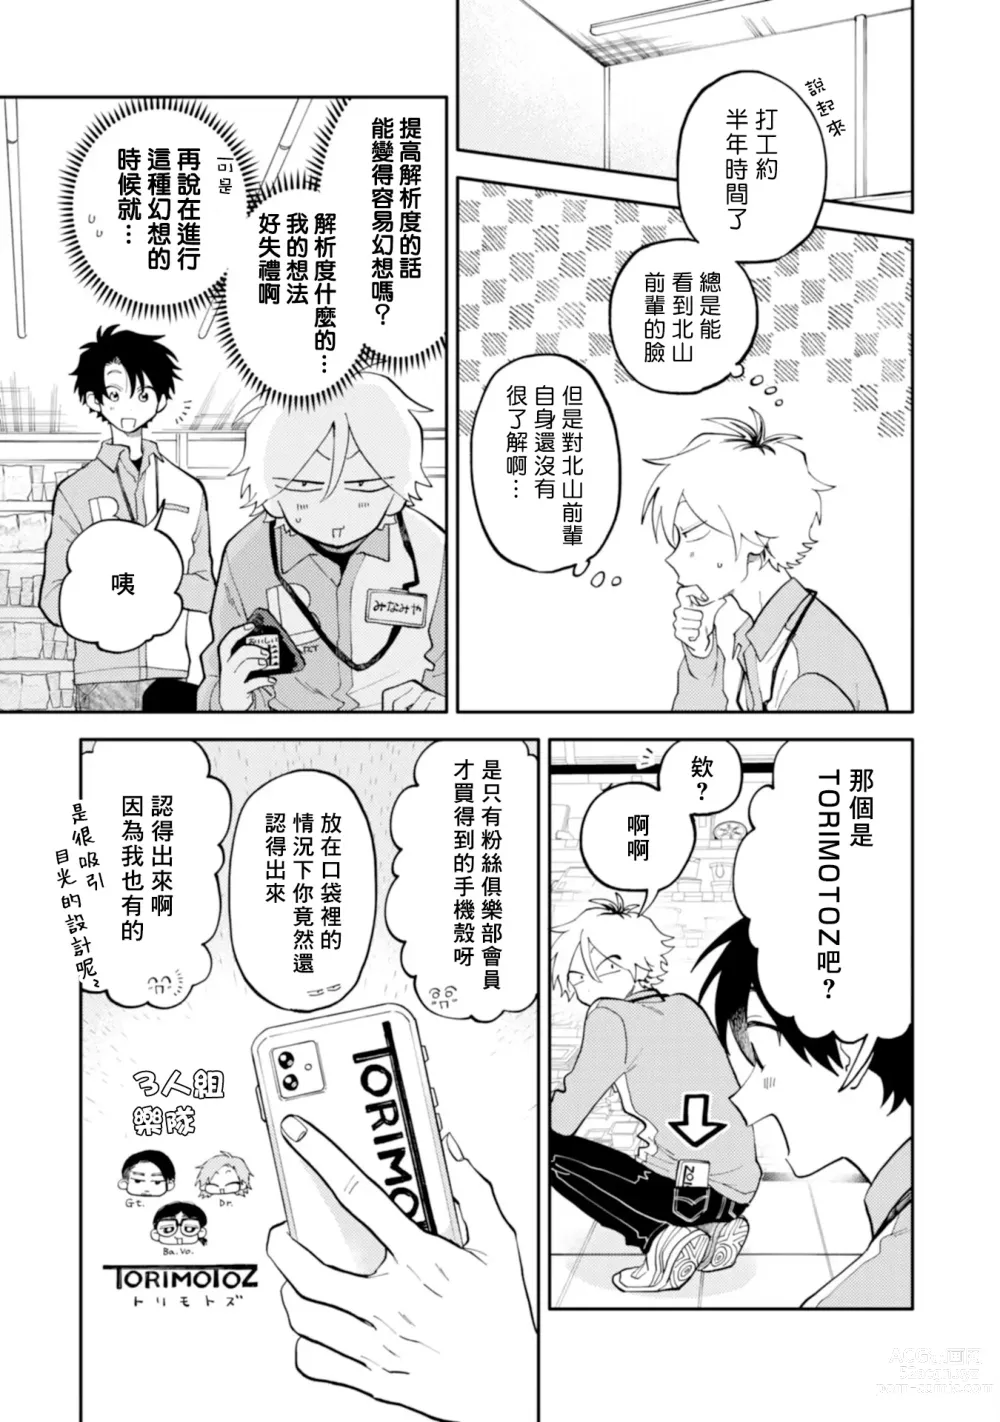 Page 13 of manga 北山君与南谷君